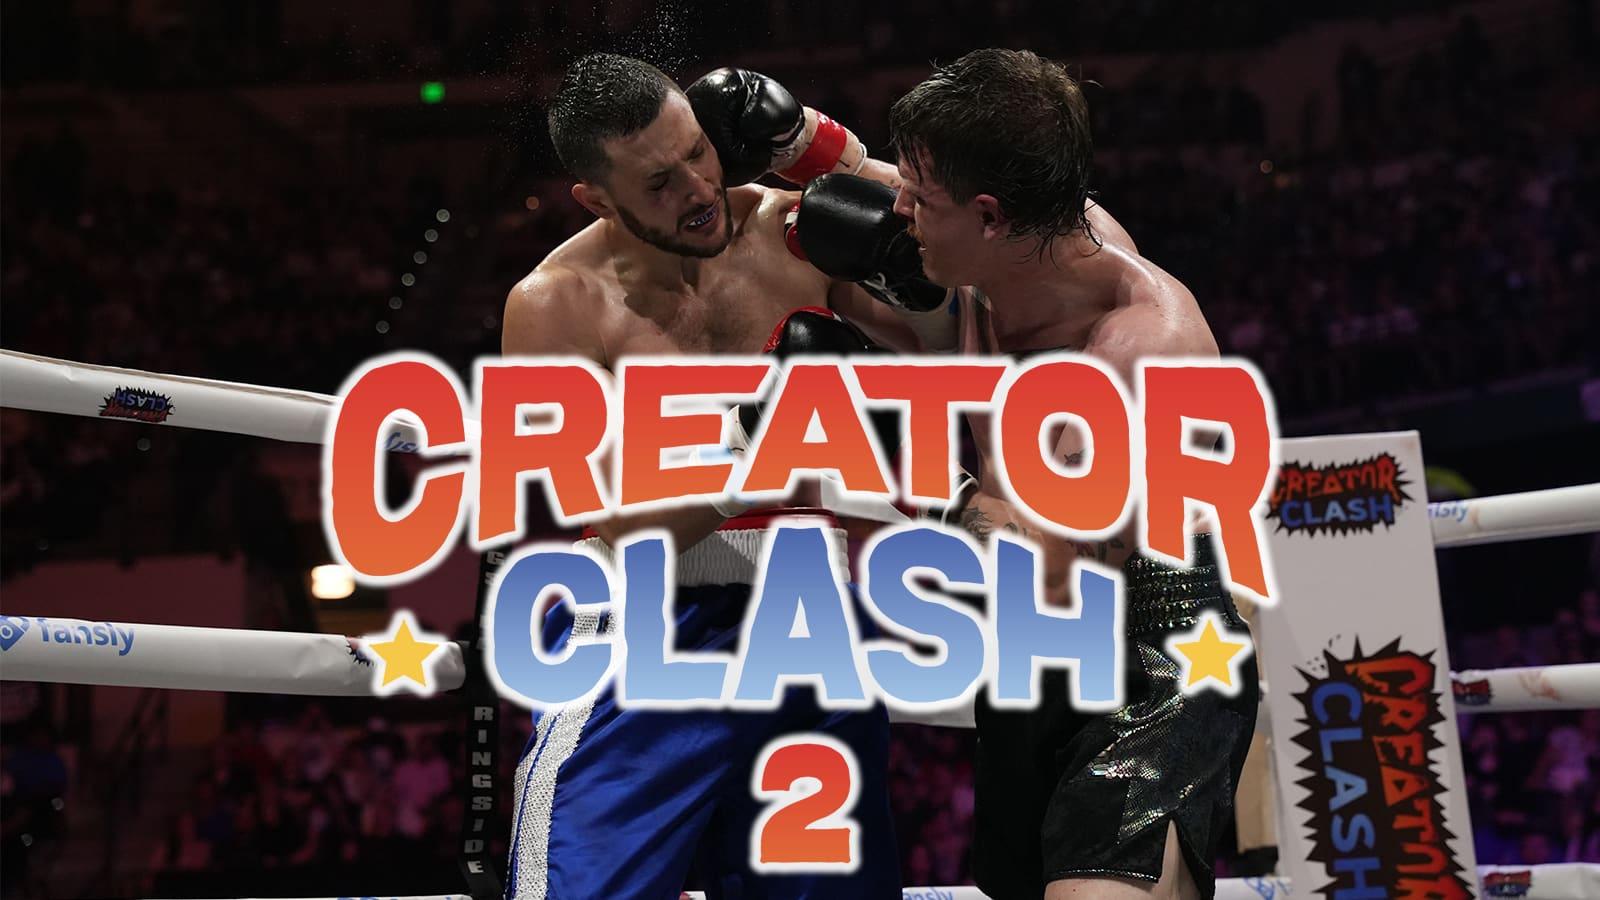 JustaMinx is now 100% confirmed for Creator Clash 2 : r